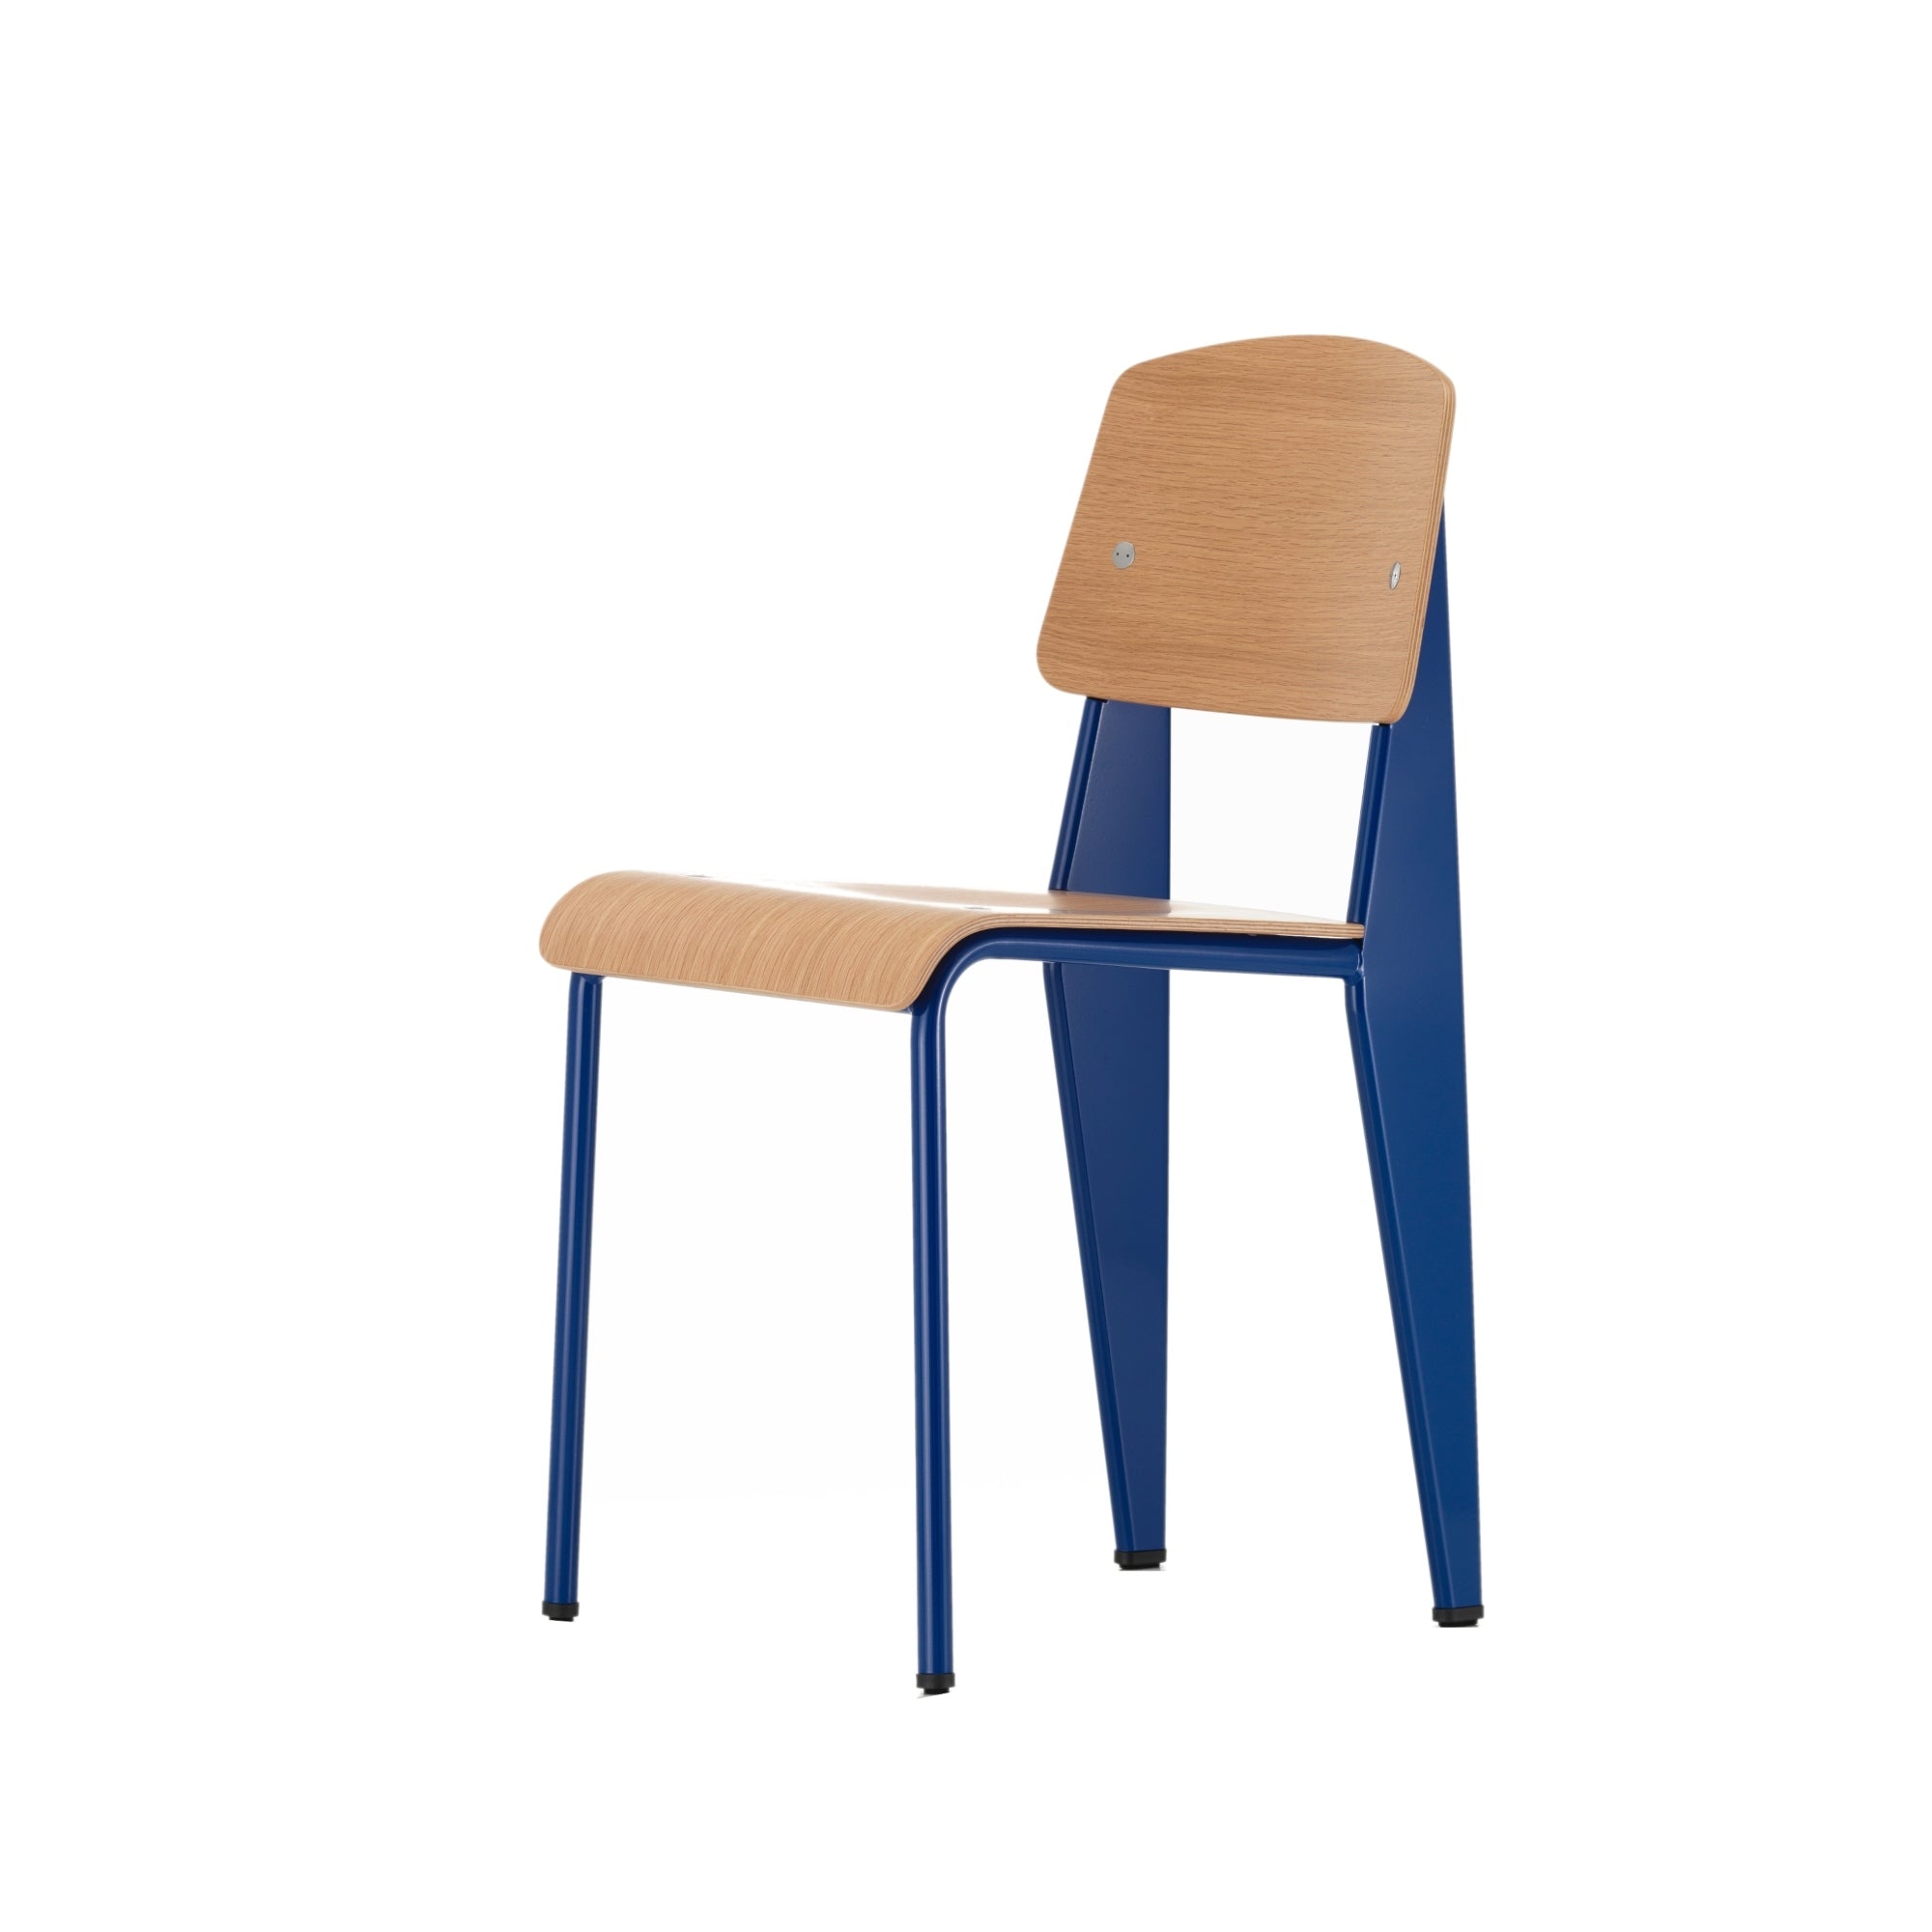 Vitra Standard tuoli tammi/bleu marcoule - Laatukaluste